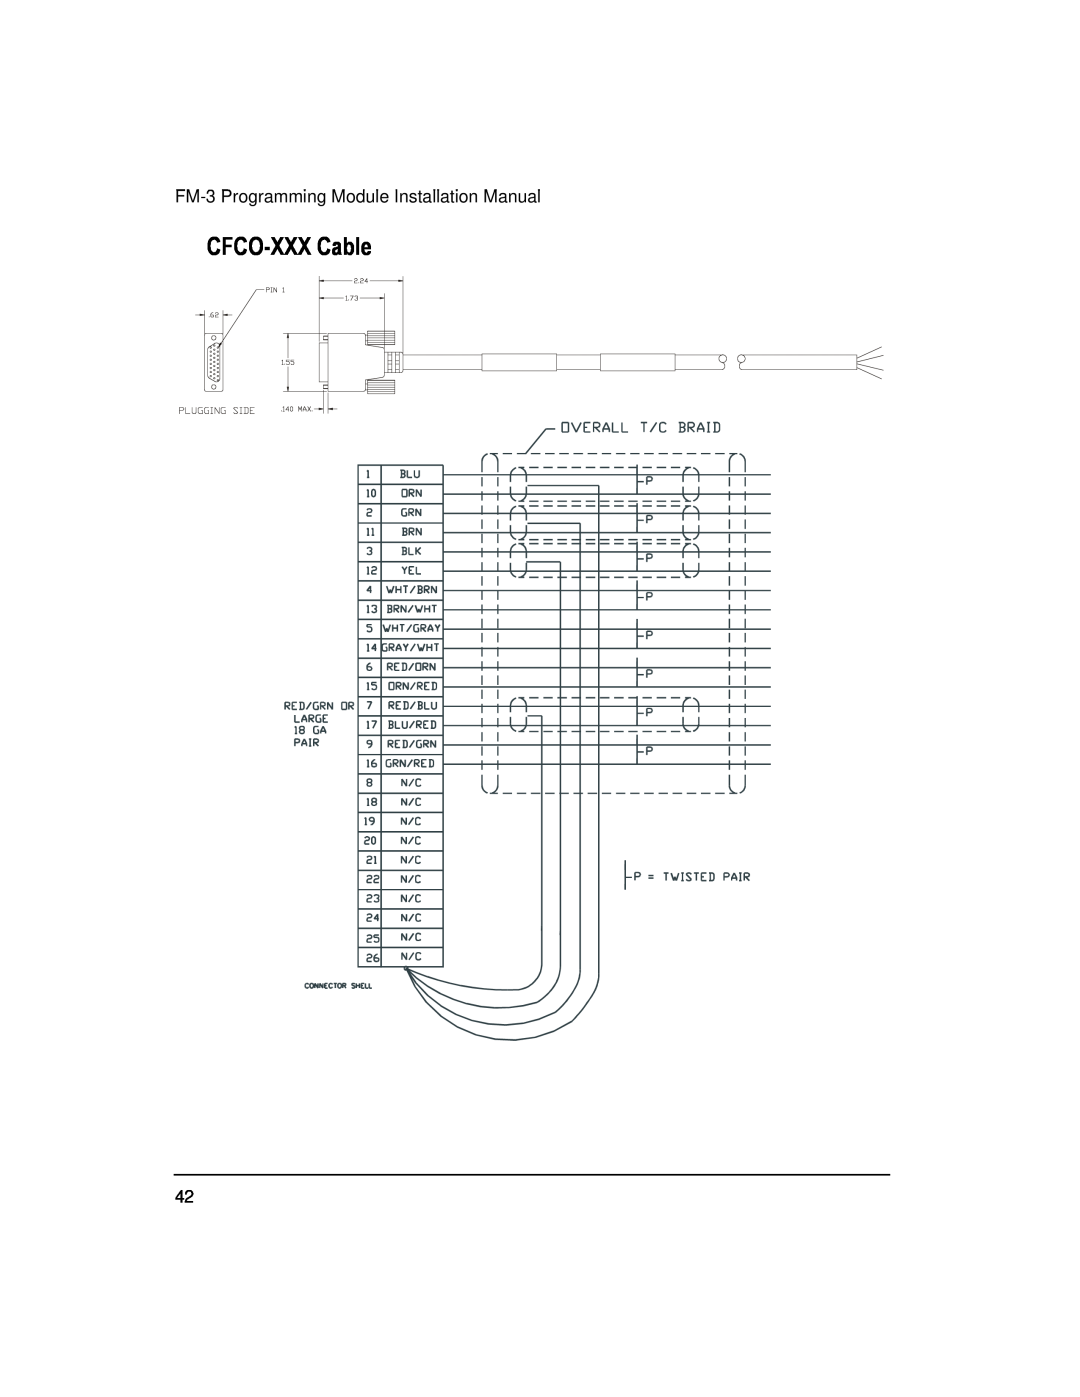 Emerson 400508-02 installation manual CFCO-XXX Cable, FM-3 Programming Module Installation Manual 